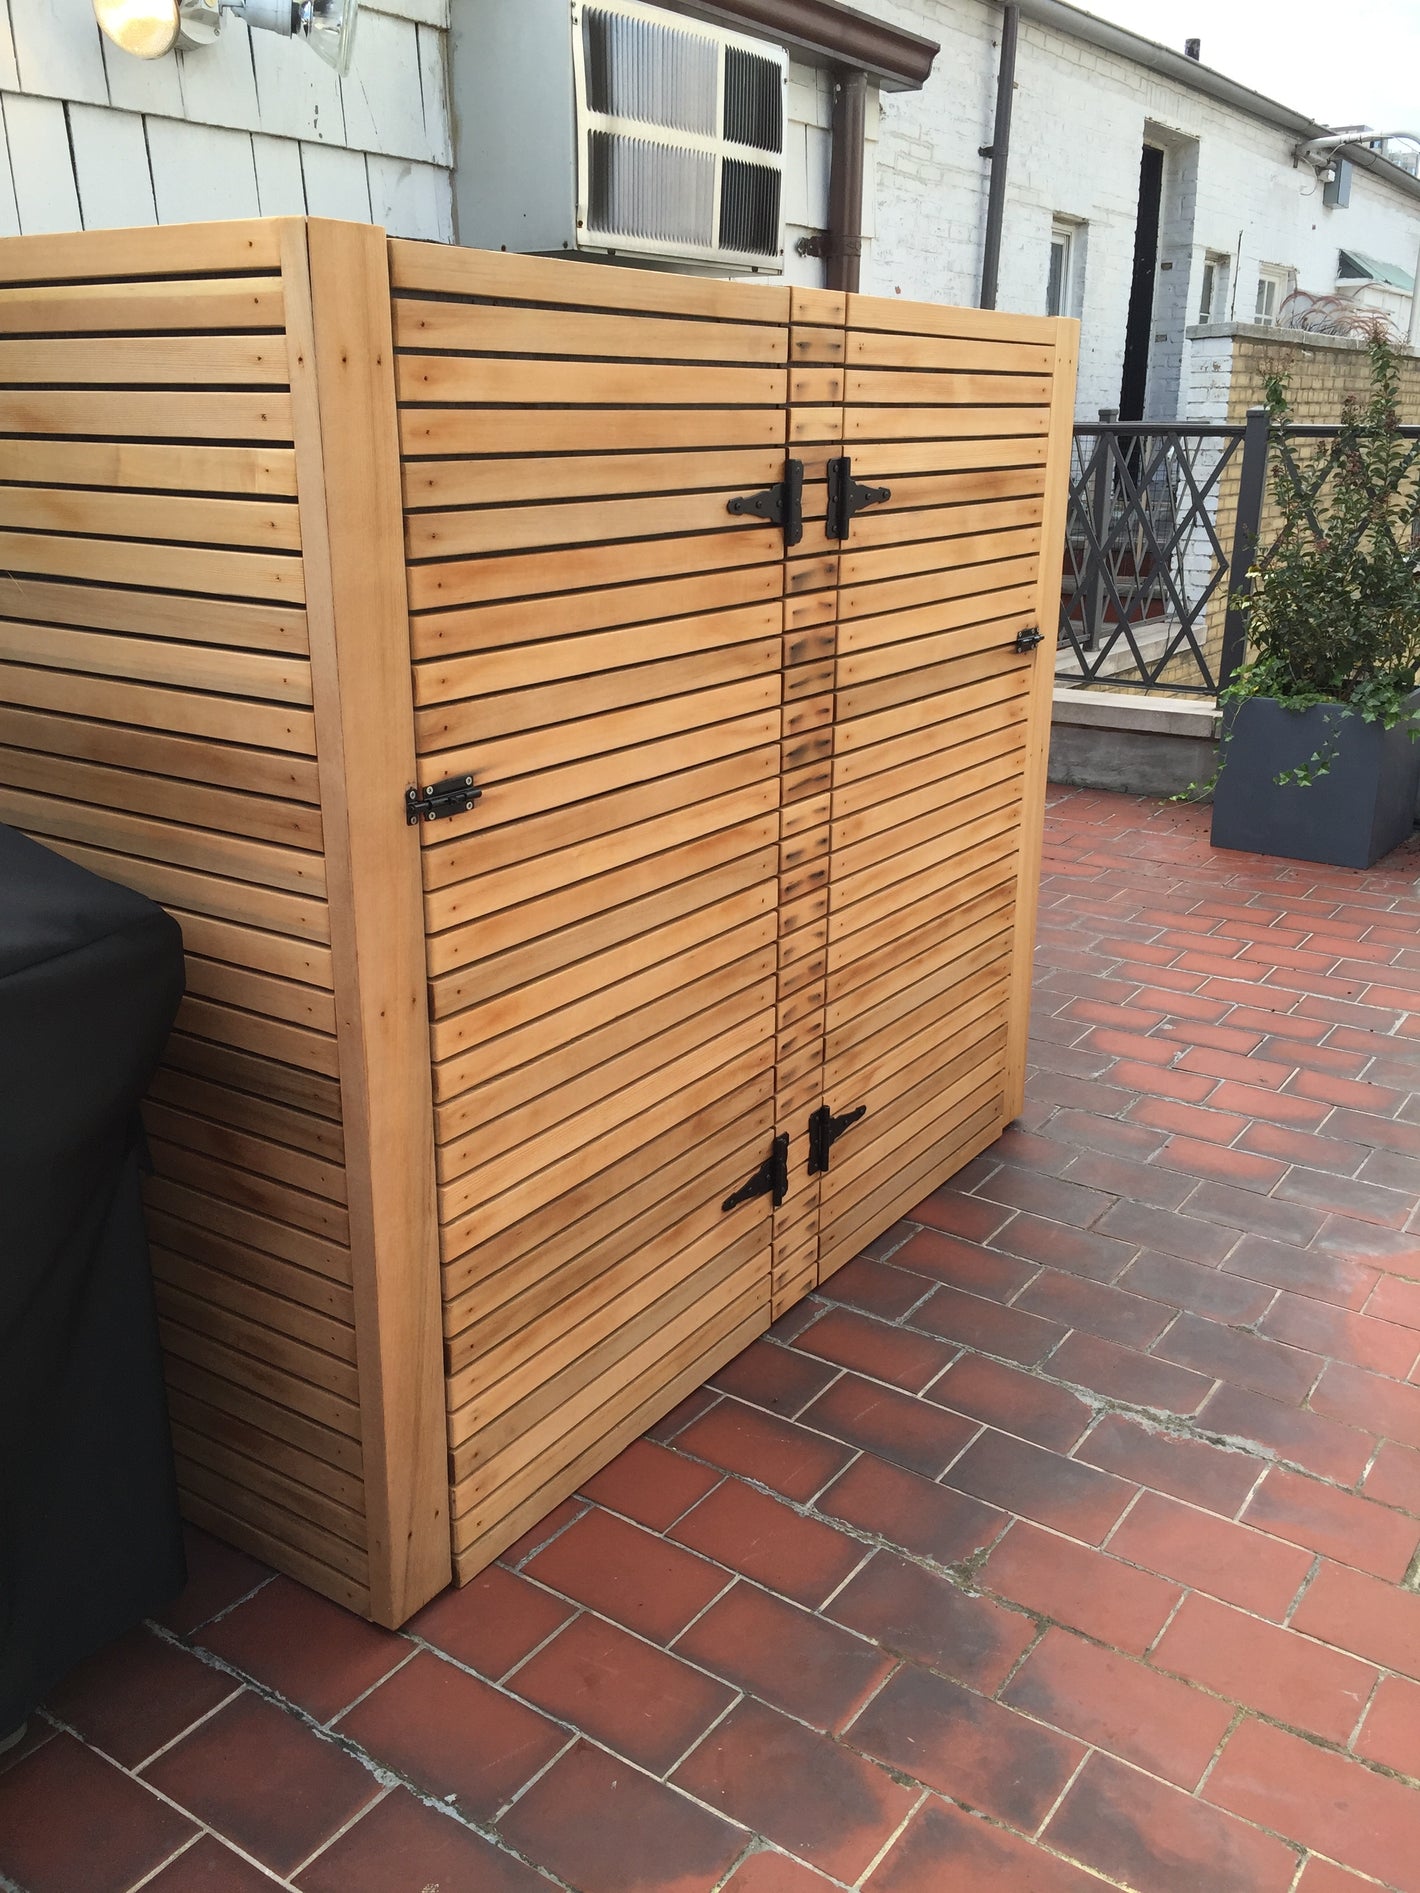 Back yard wood storage unit created by TCSC